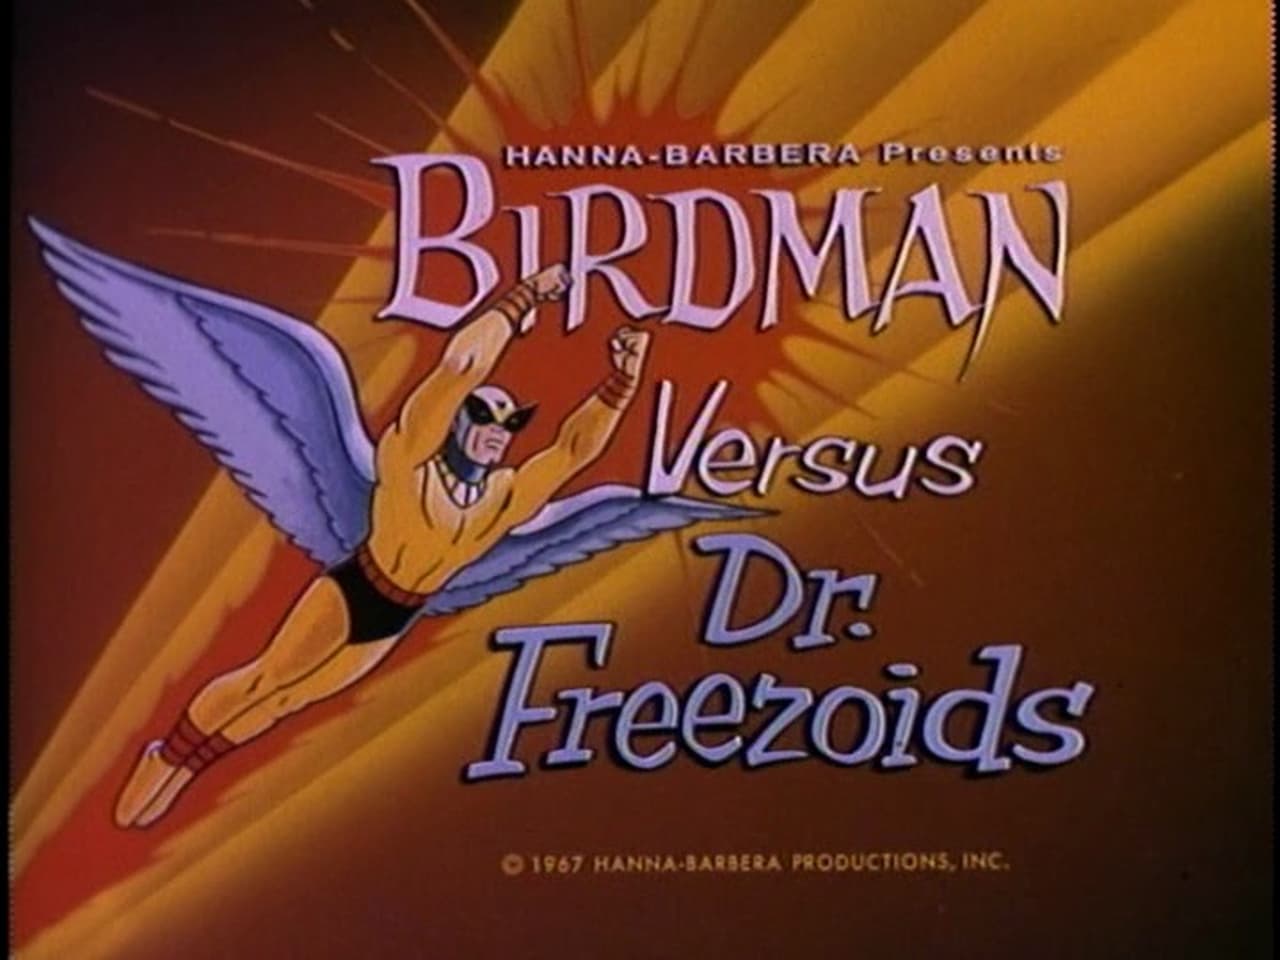 Birdman Versus Dr Freezoids